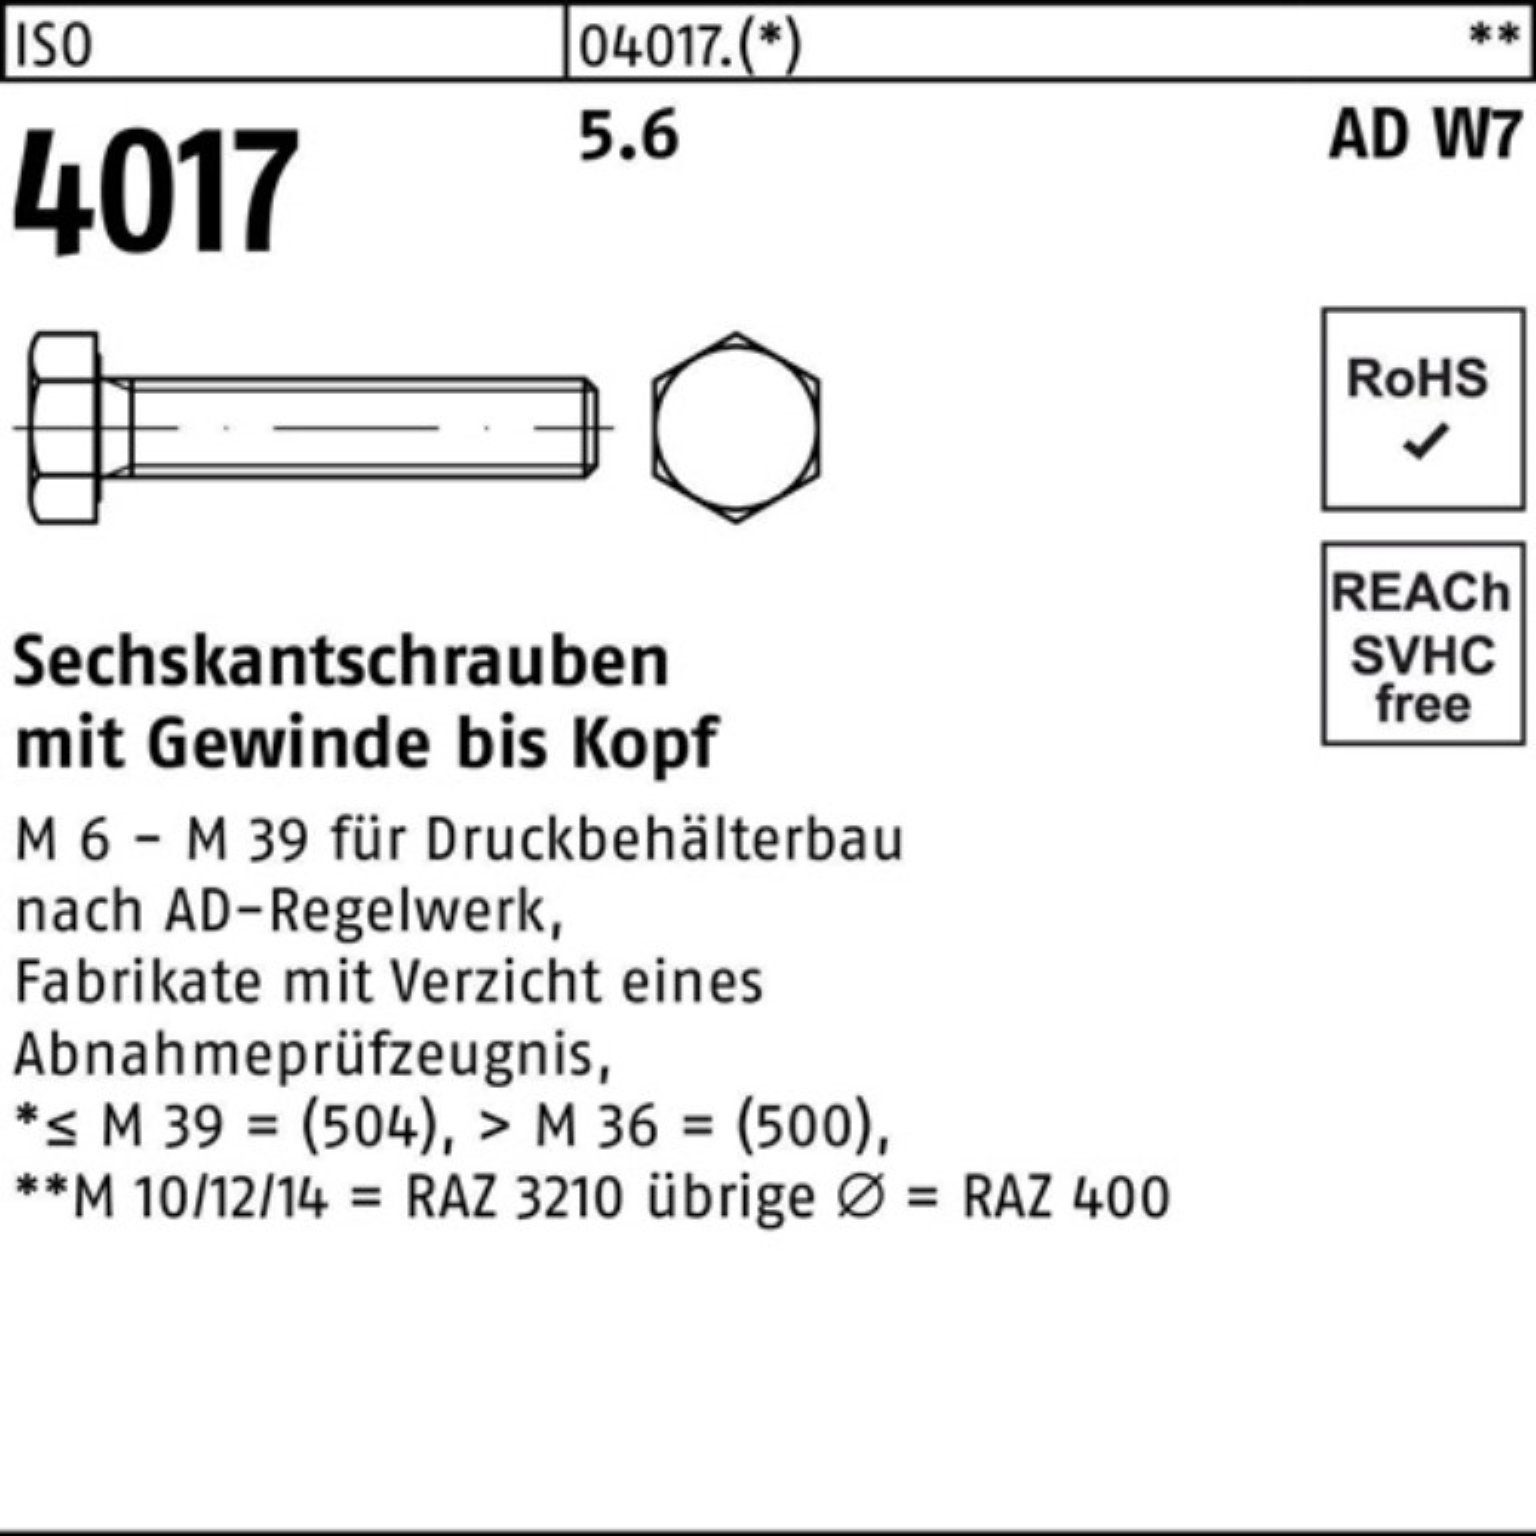 VG I Bufab Sechskantschraube 25 Pack ISO 65 W7 5.6 Sechskantschraube M20x 100er AD Stück 4017